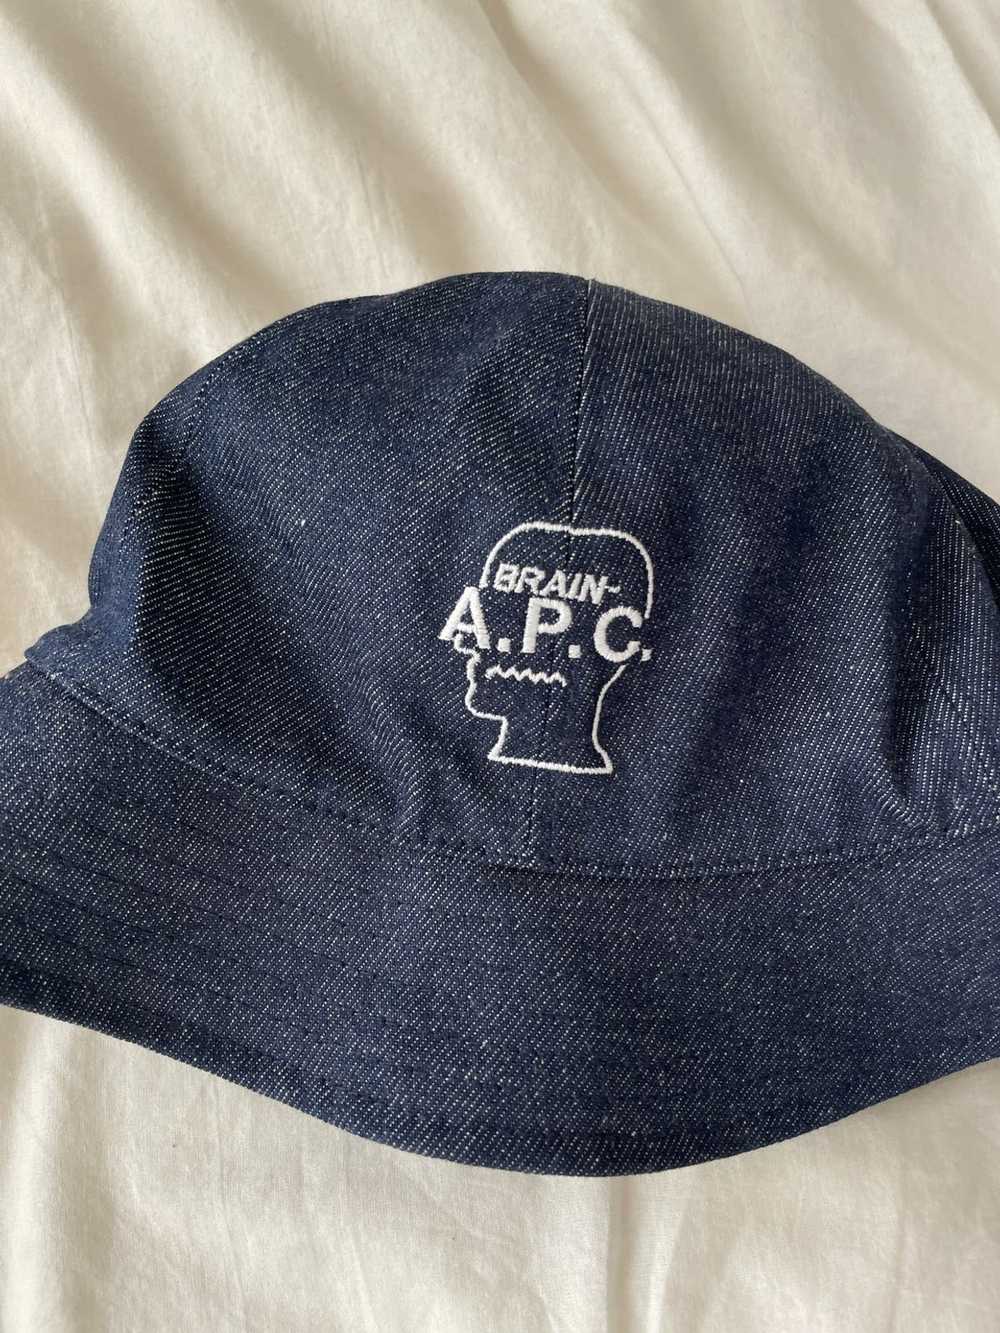 A.P.C. × Brain Dead Brain Dead A.P.C bucket hat - image 2